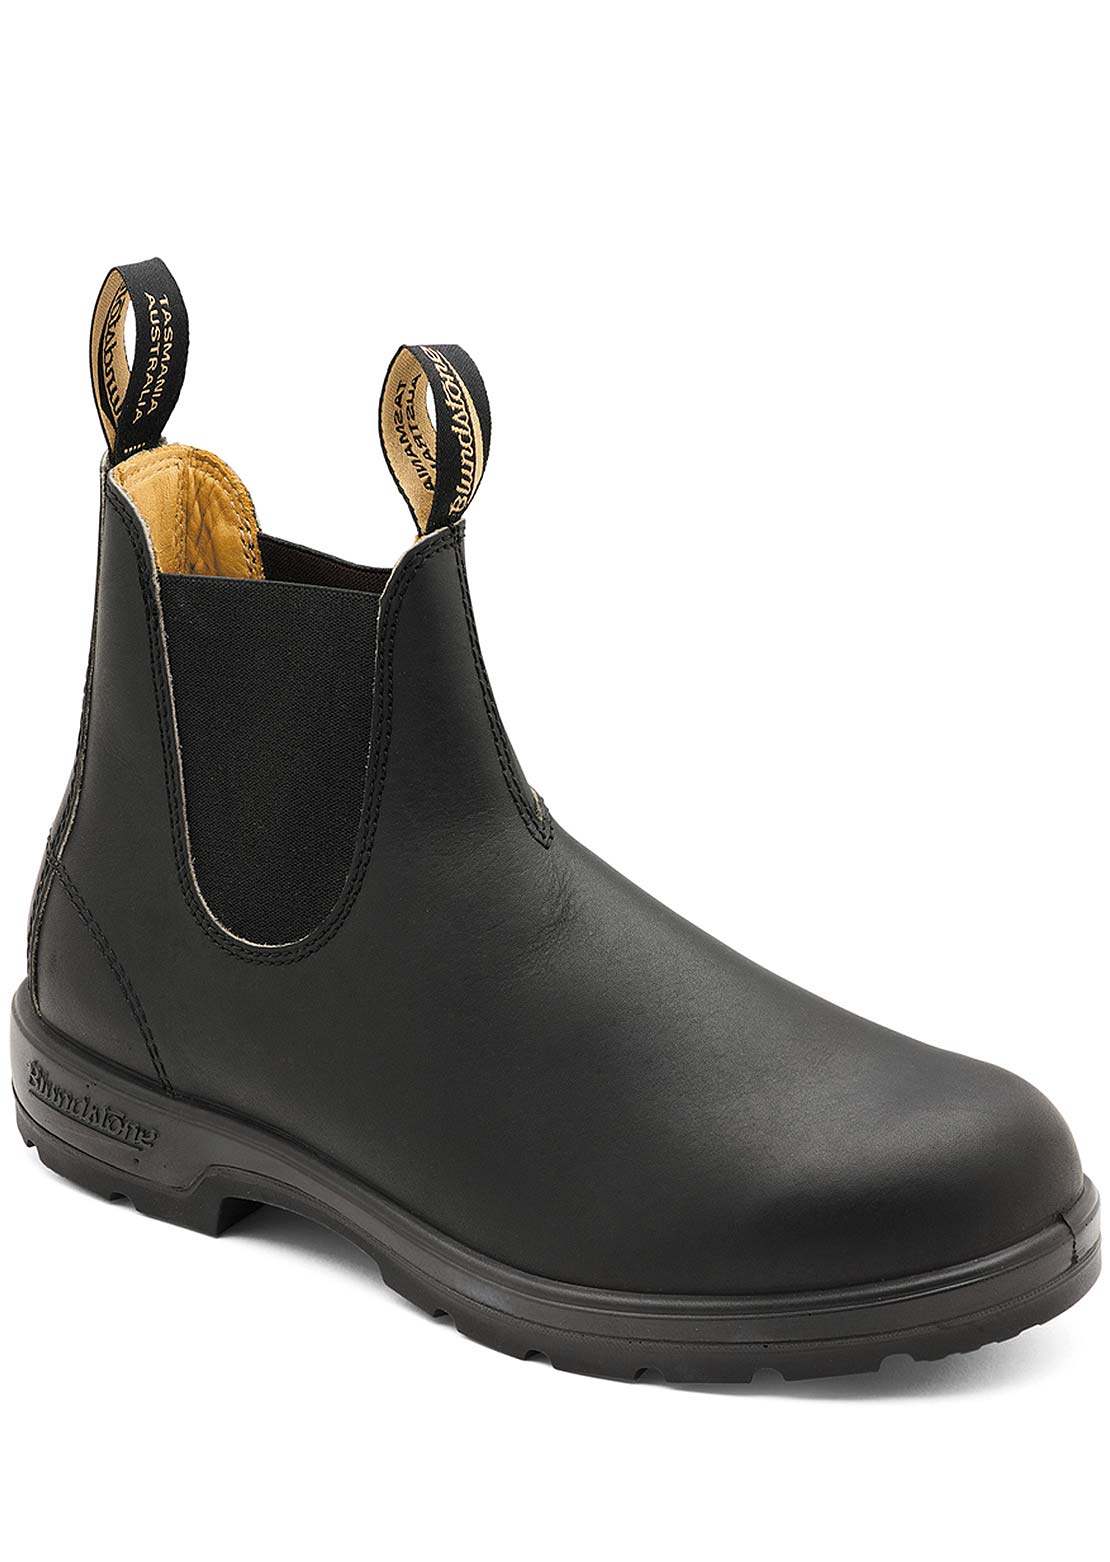 Blundstone 558 Classic Boots Black